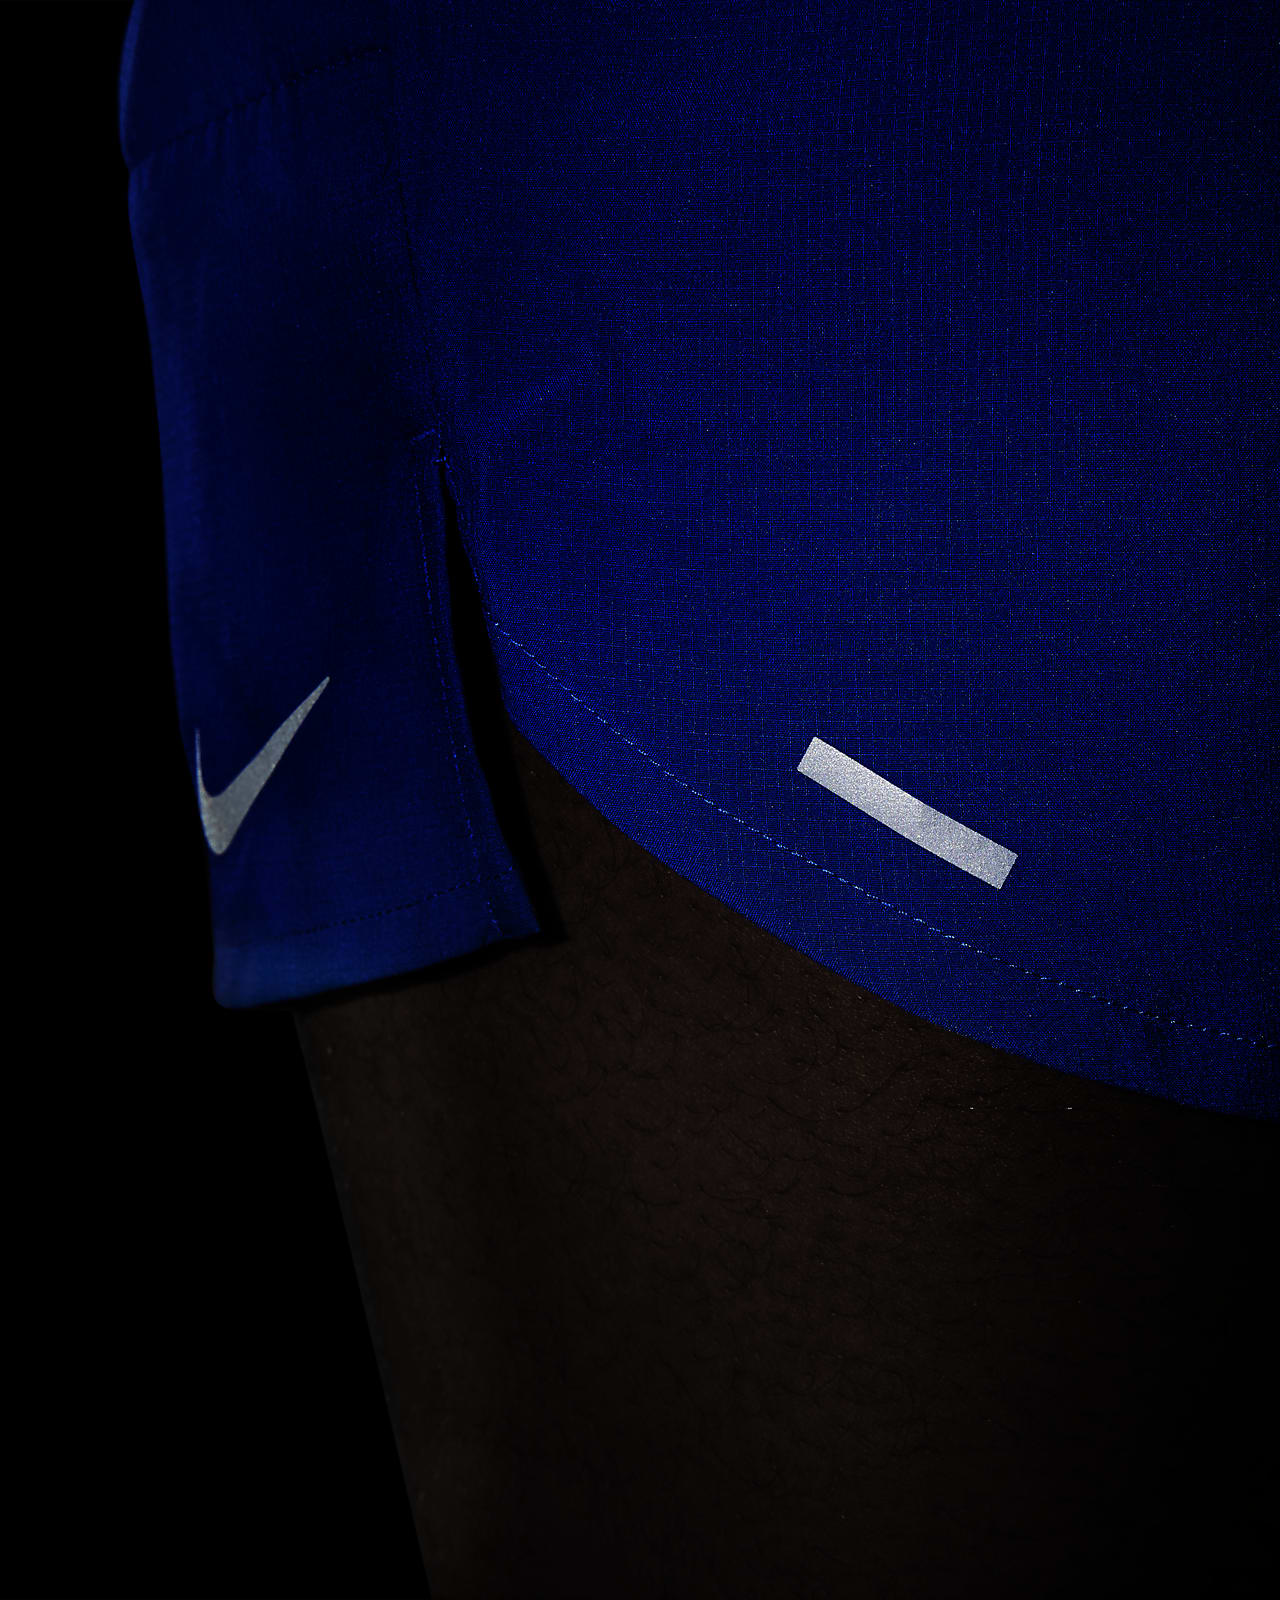 Nike Dri Fit Running Shorts w/ Built In Underwear - $14 (74% Off